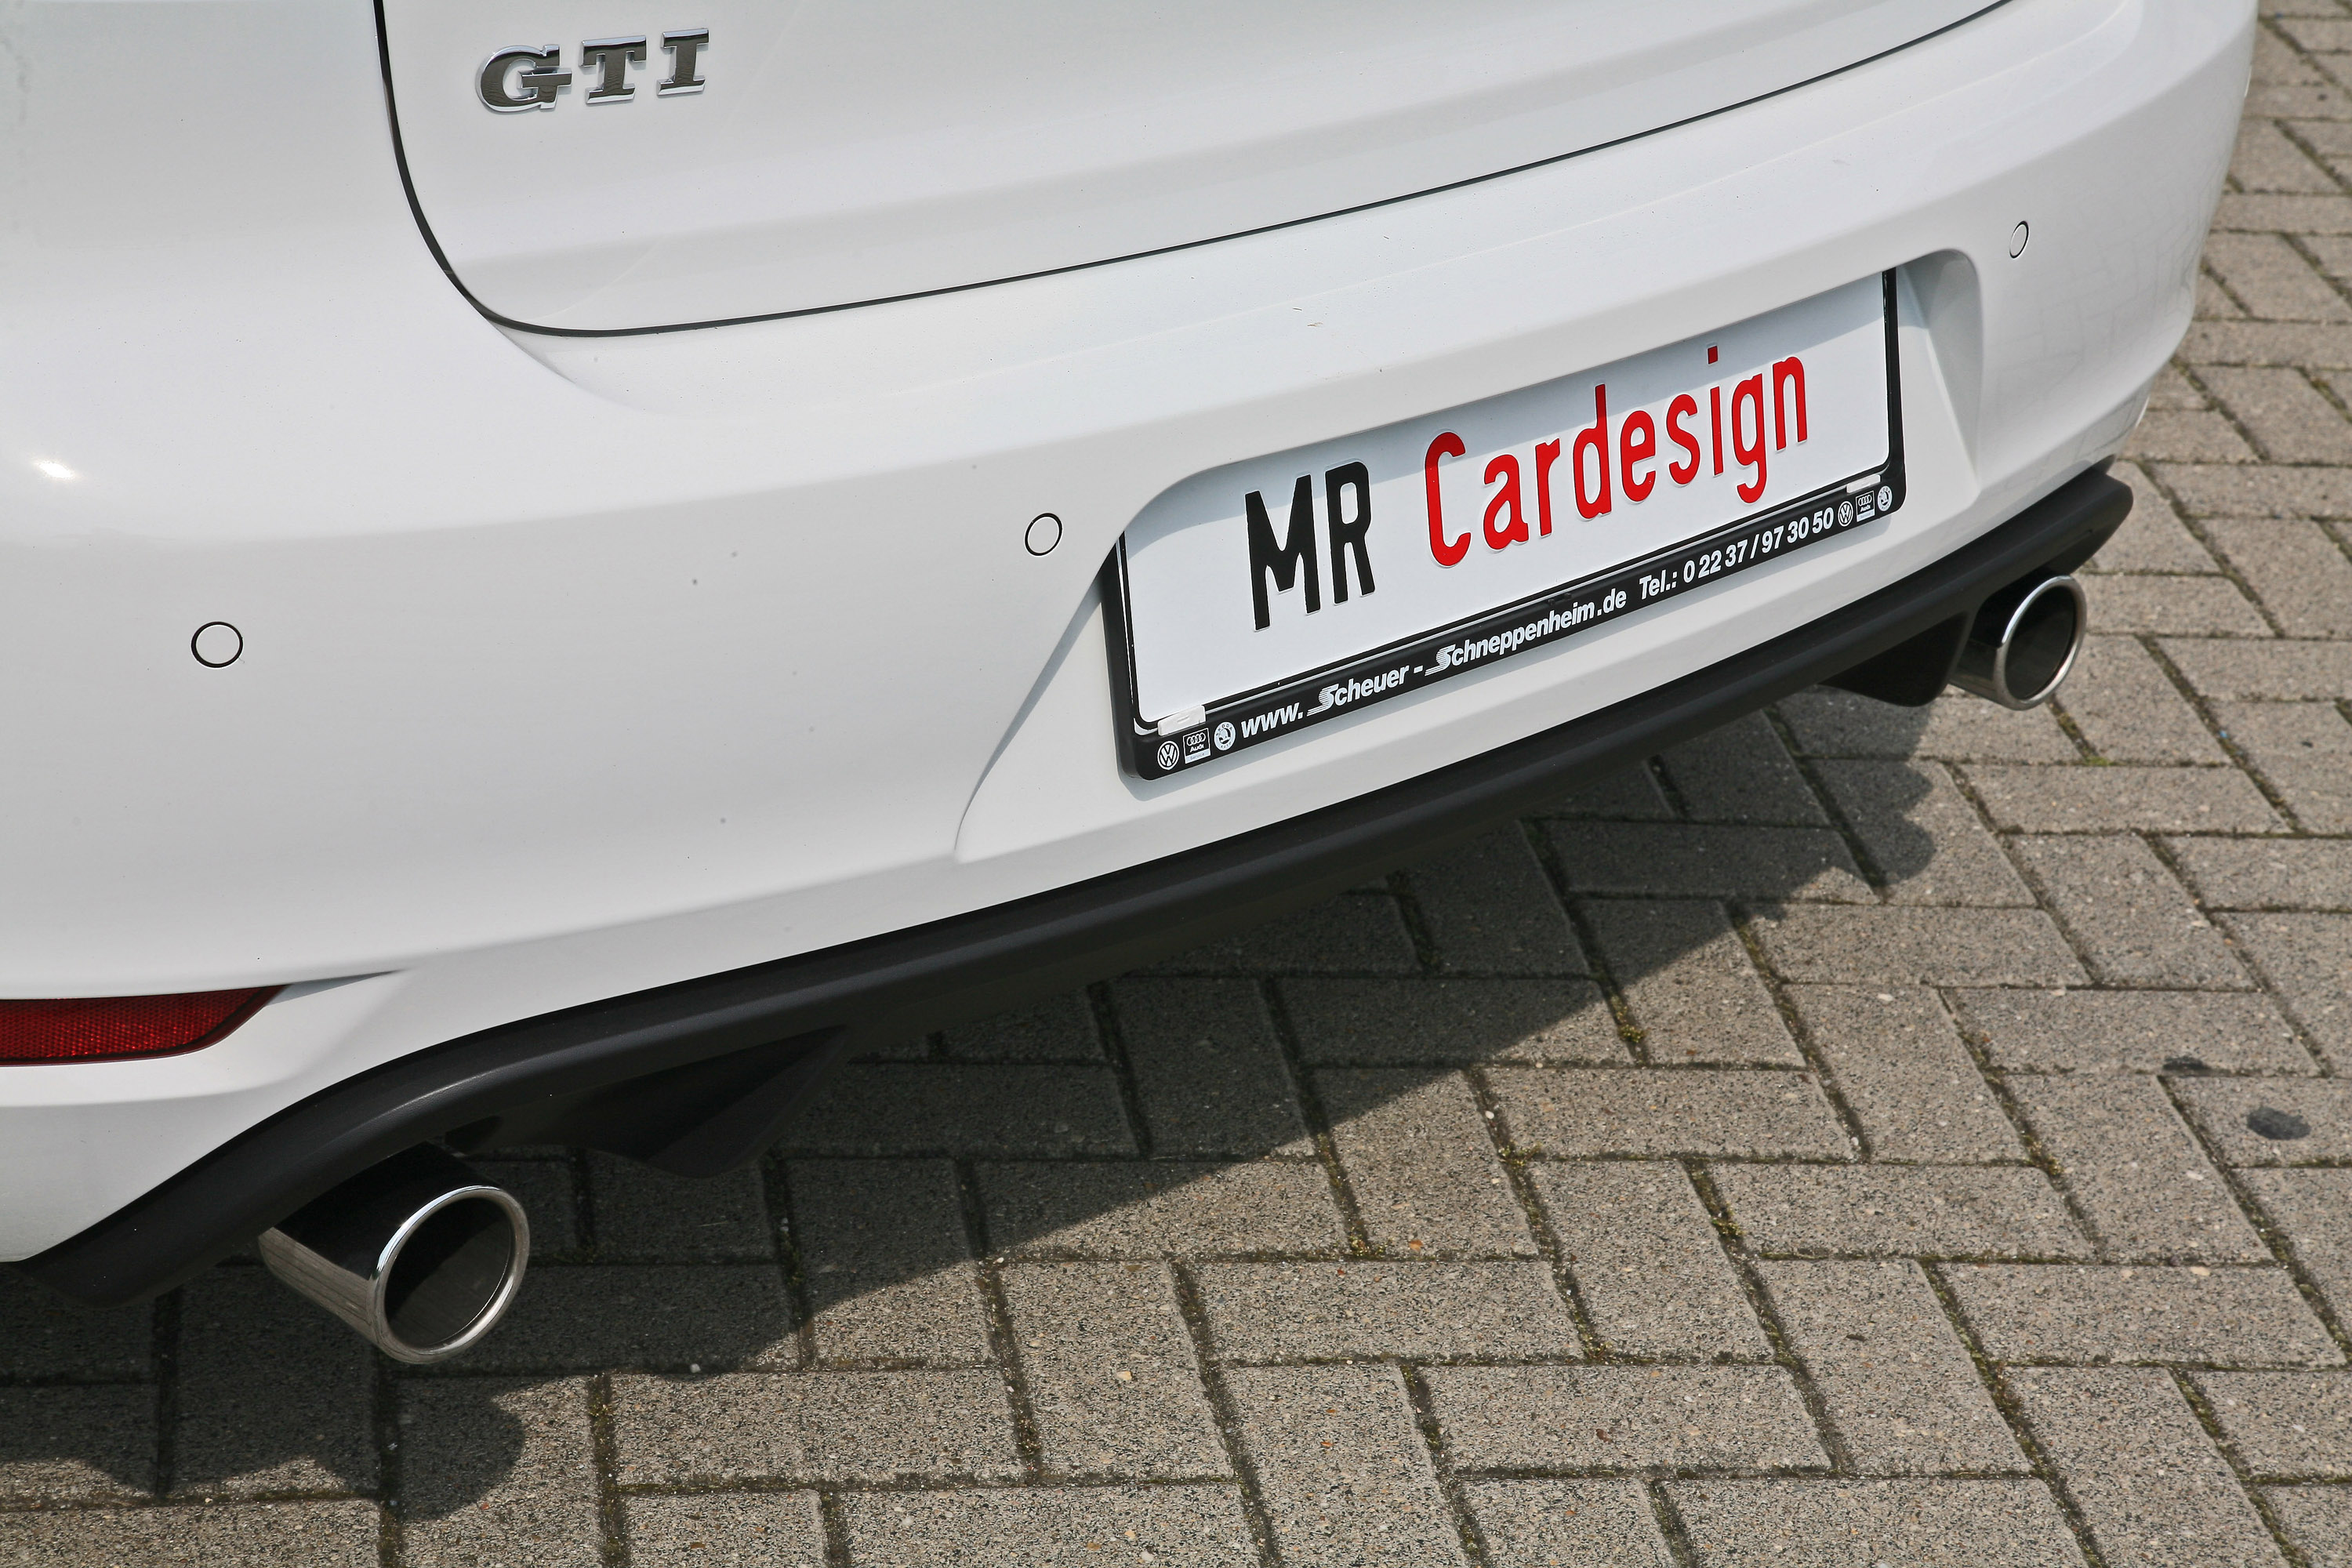 MR Car Design Volkswagen Golf VI GTI